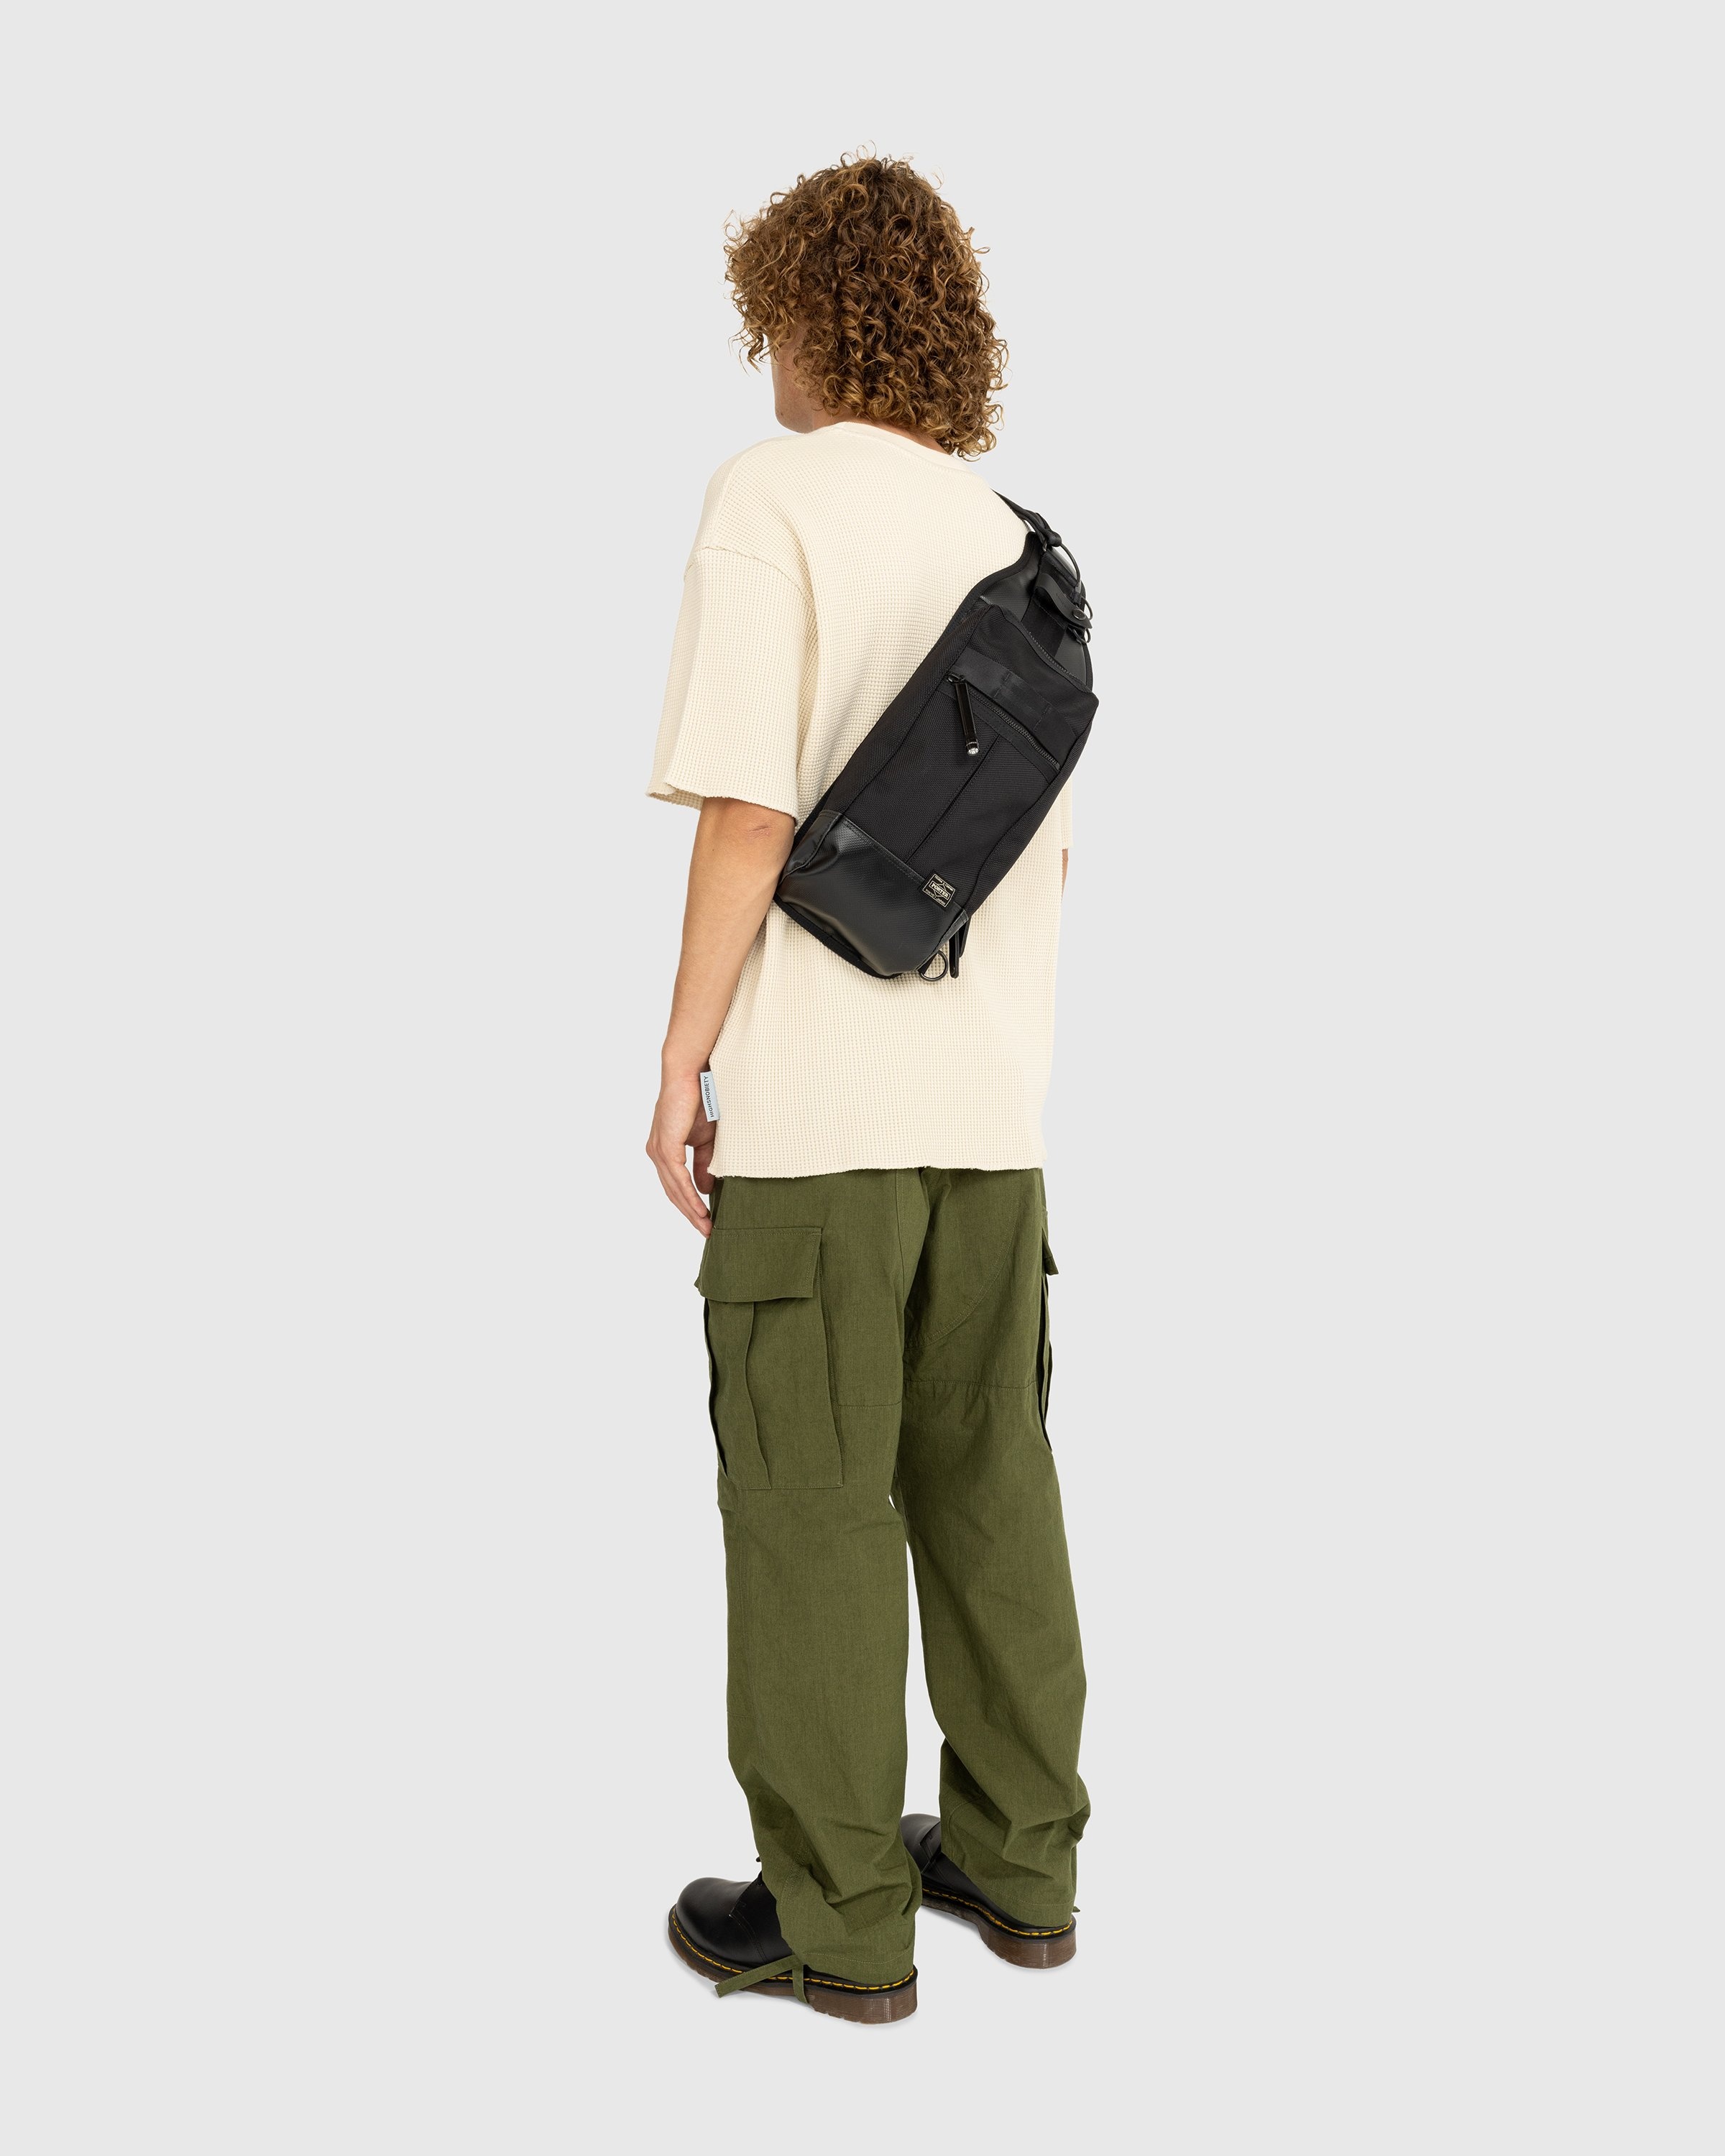 Porter-Yoshida & Co. Heat Sling Shoulder Bag